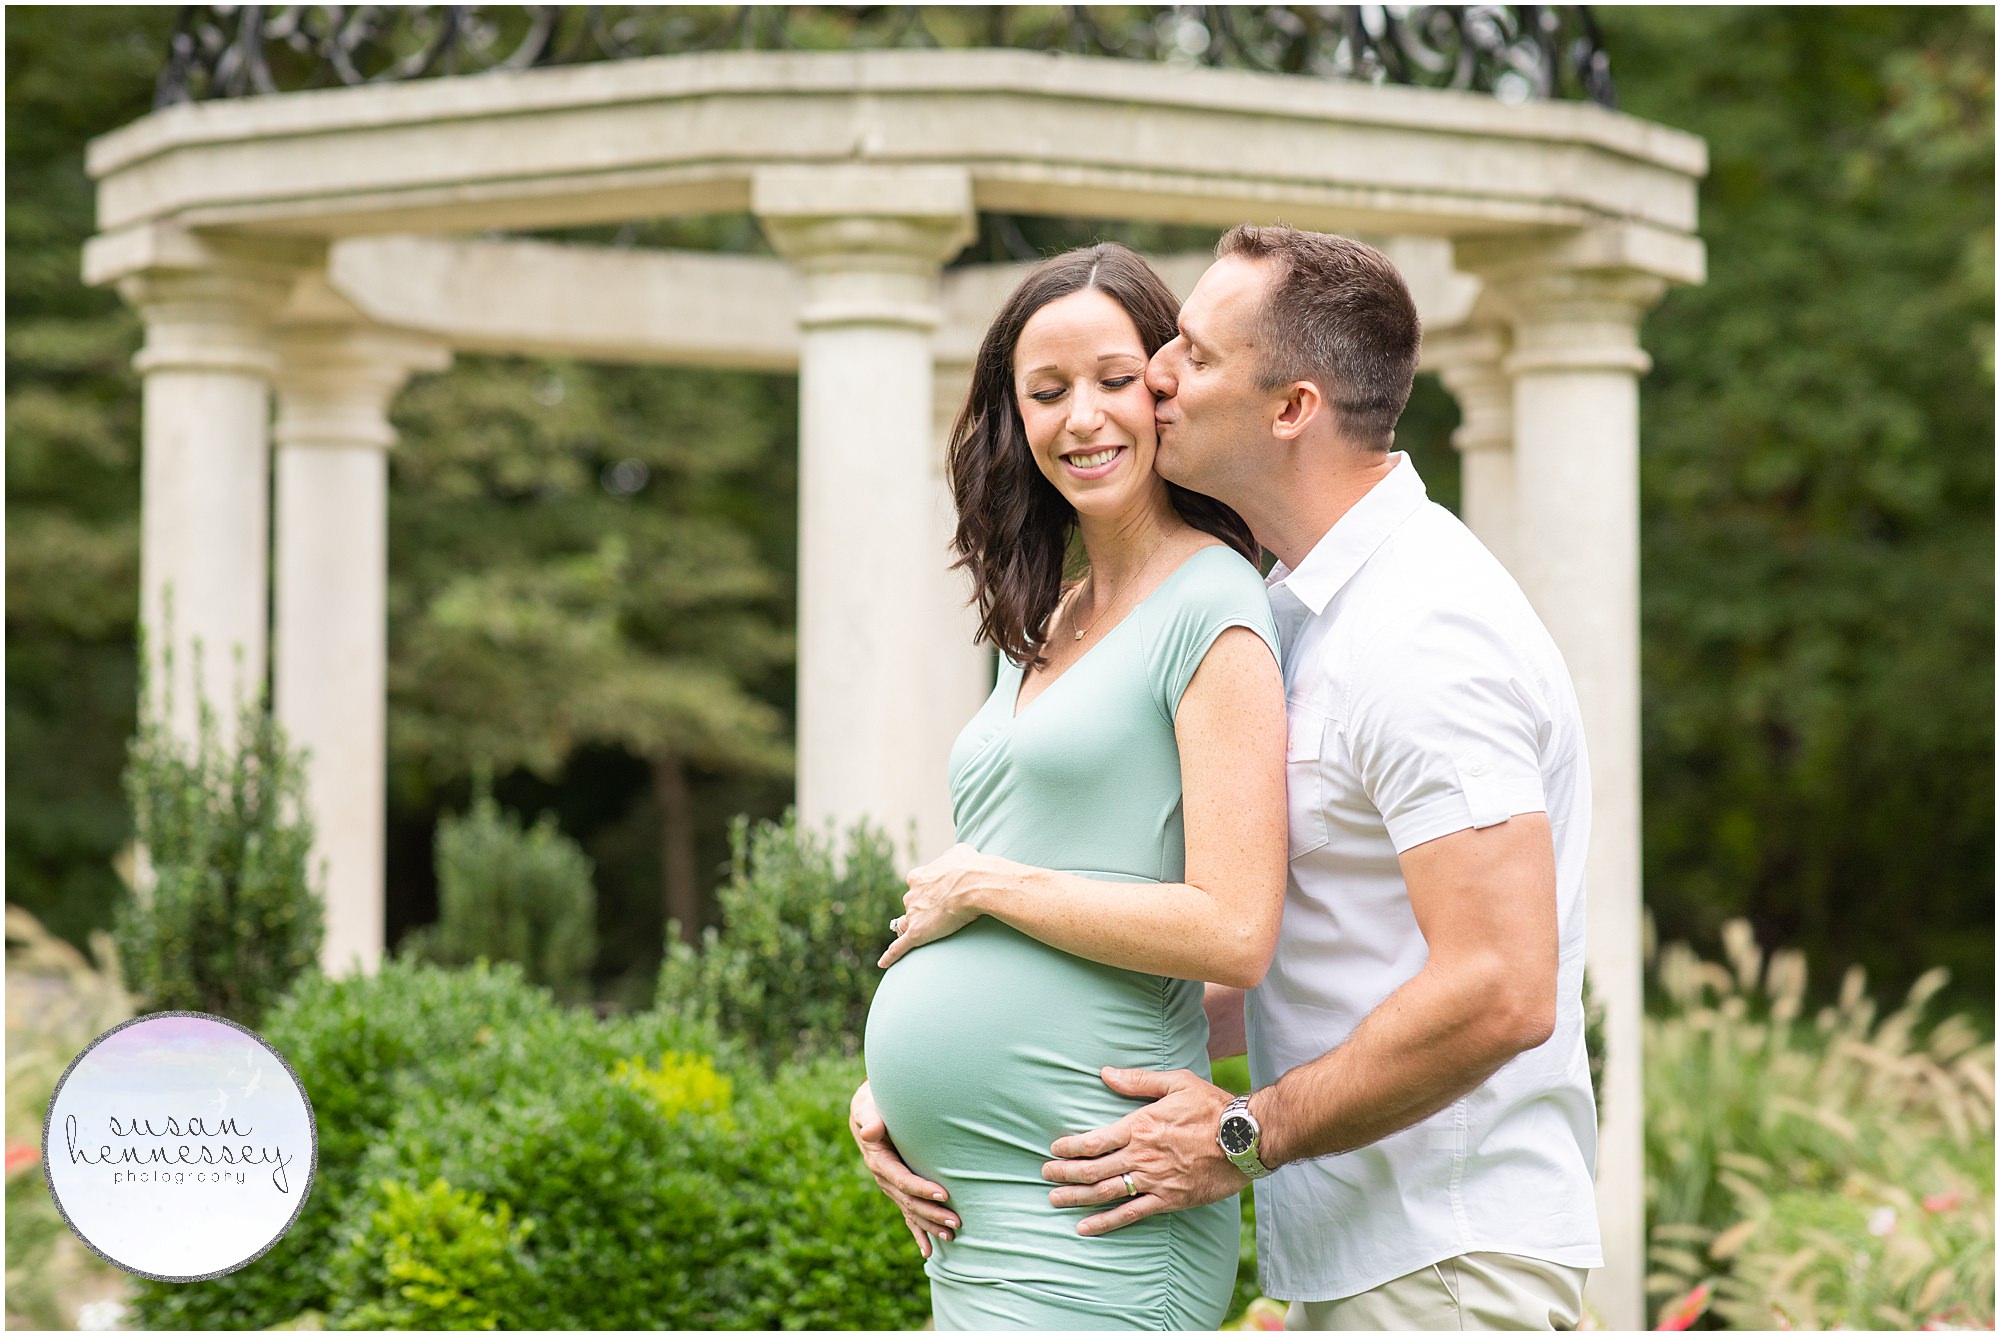 A pregnant couple at Sayen Gardens in Hamilton, NJ